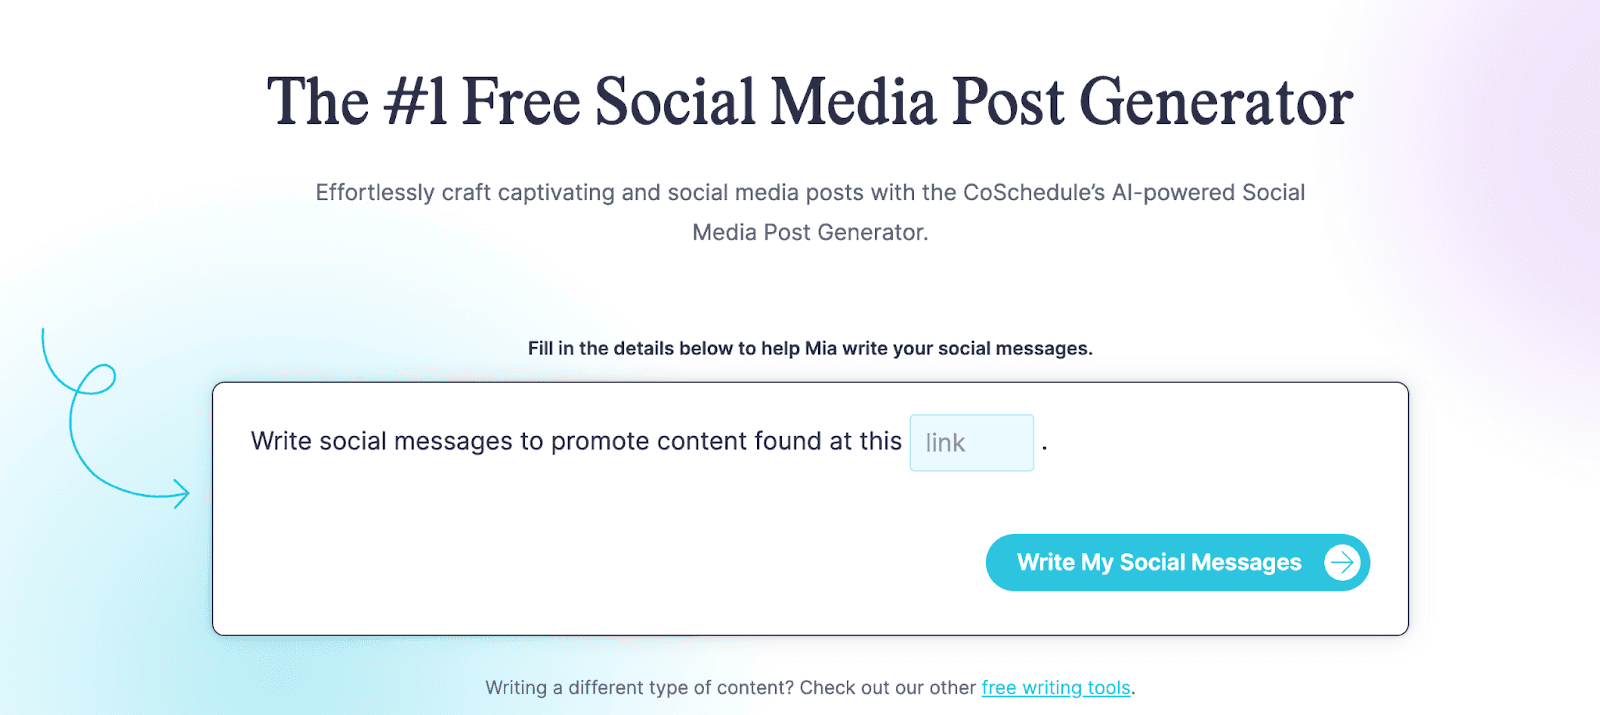 The #1 free social media post generator